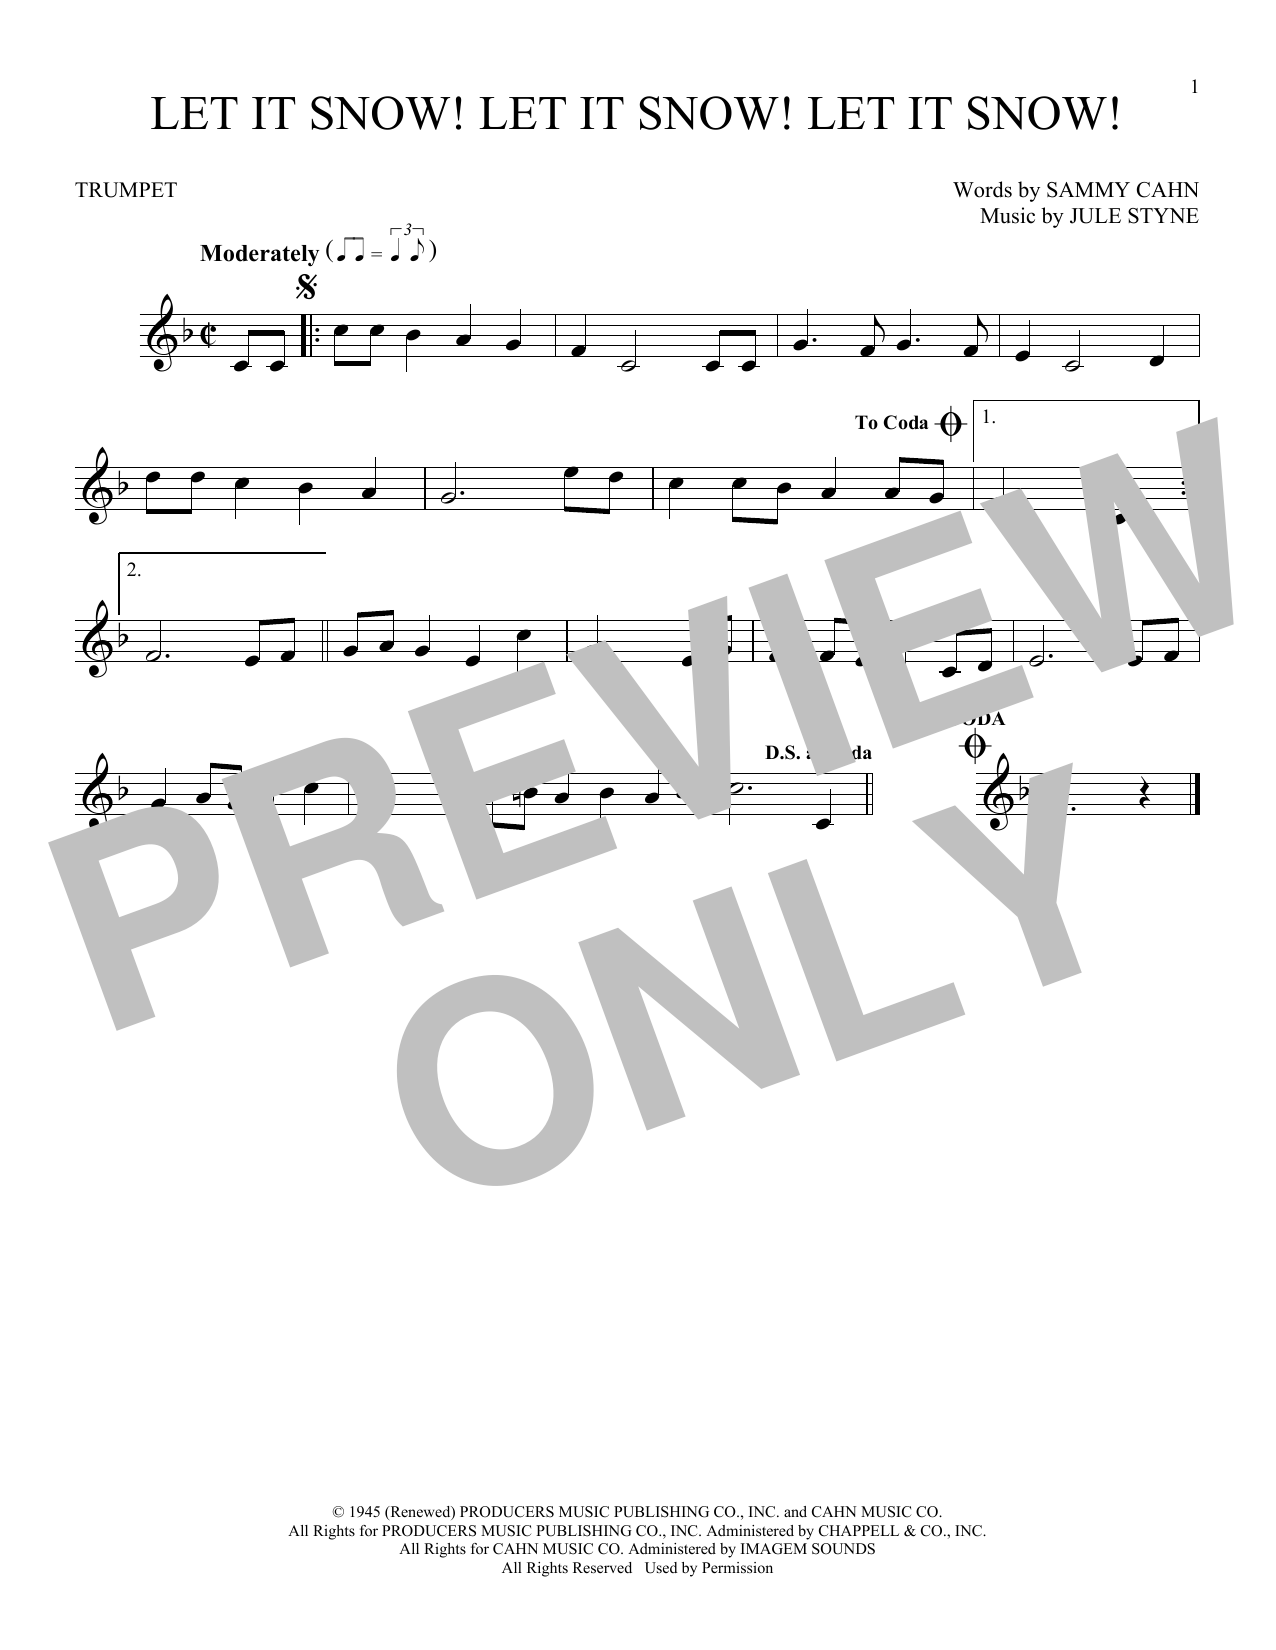 Sammy Cahn & Julie Styne Let It Snow! Let It Snow! Let It Snow! Sheet Music Notes & Chords for Flute - Download or Print PDF